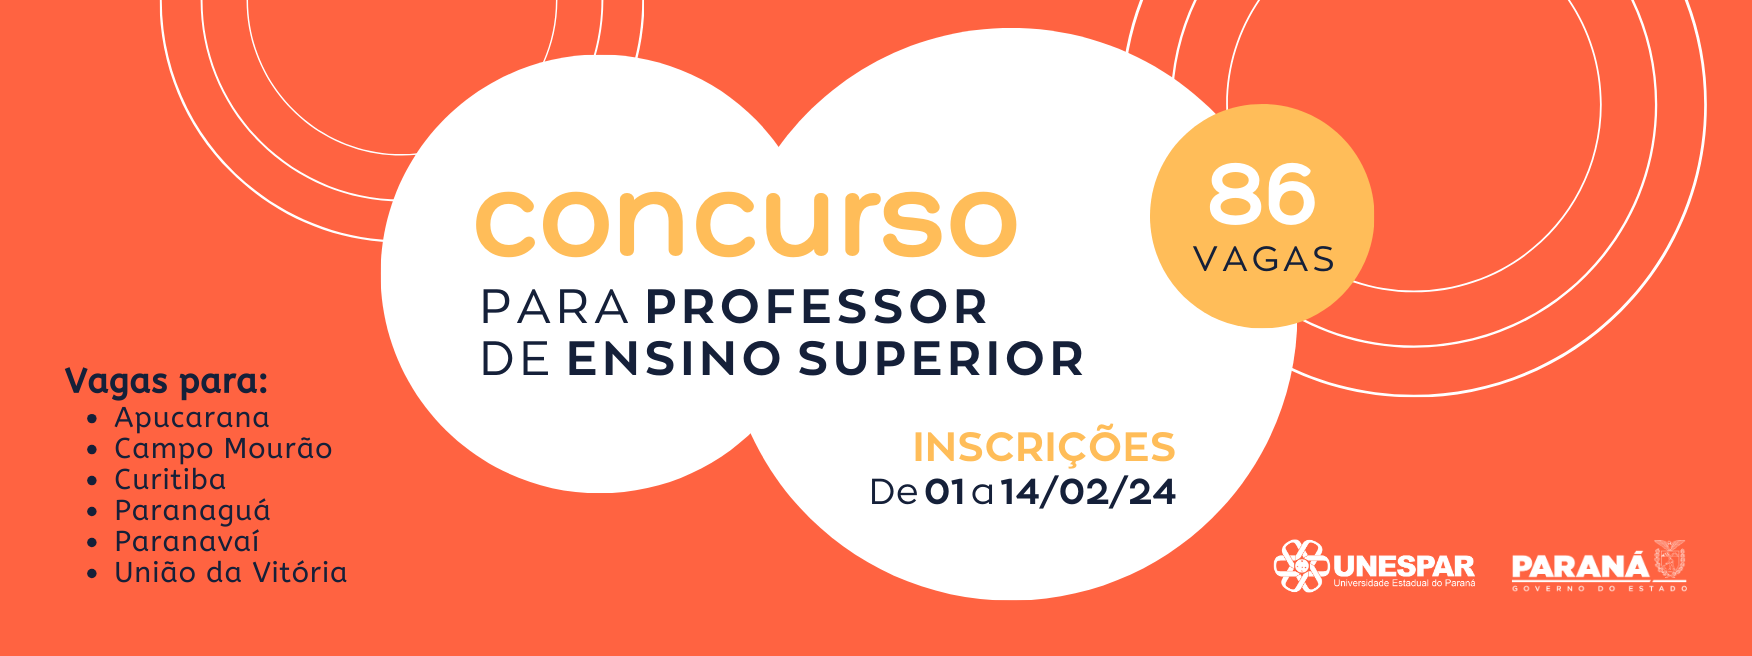 CONCURSO PROFESSOR BANNER.png